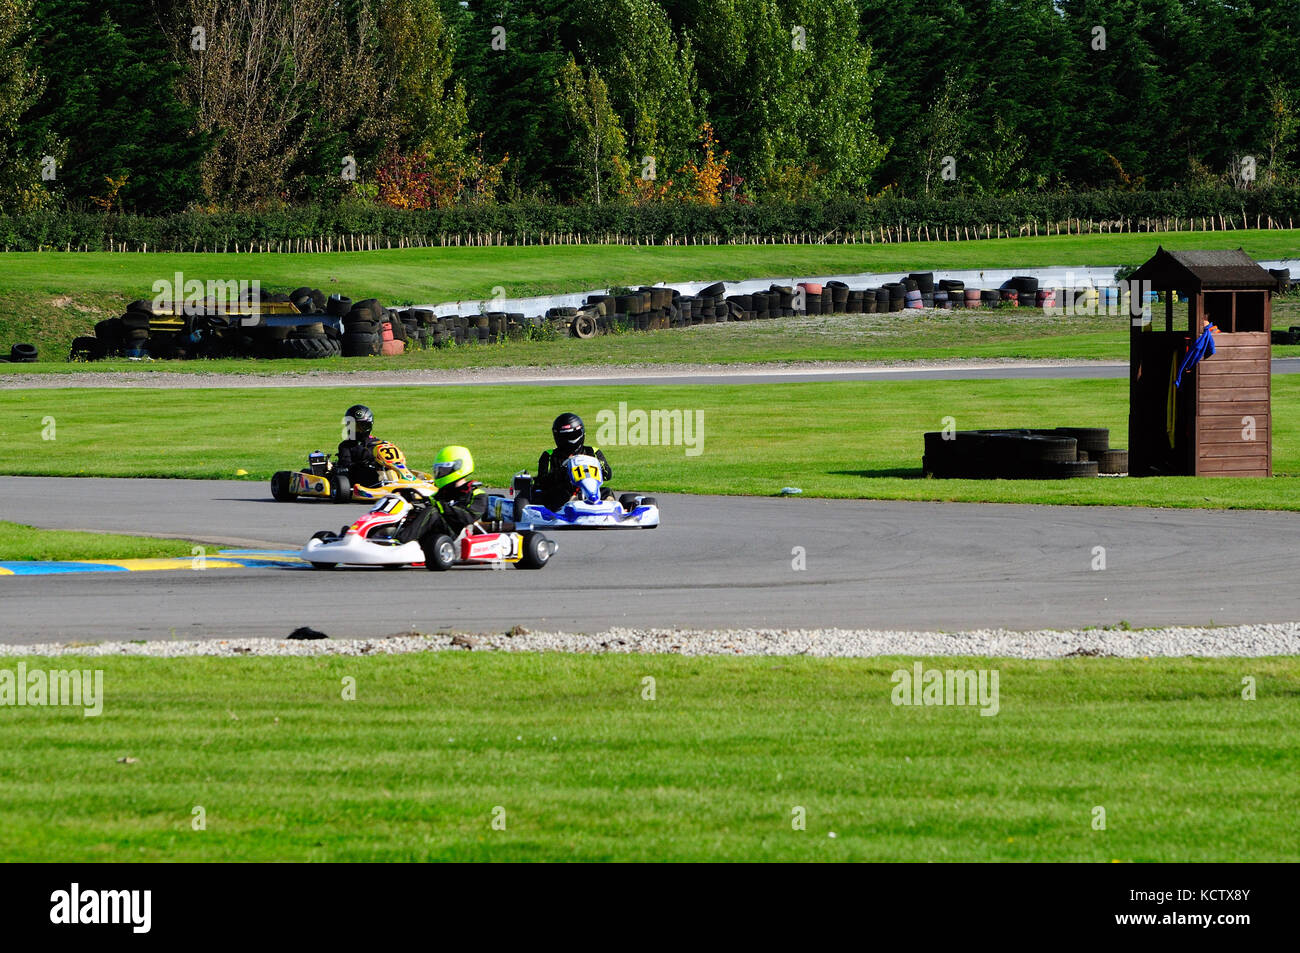 Go Karting around a race track Stock Photo